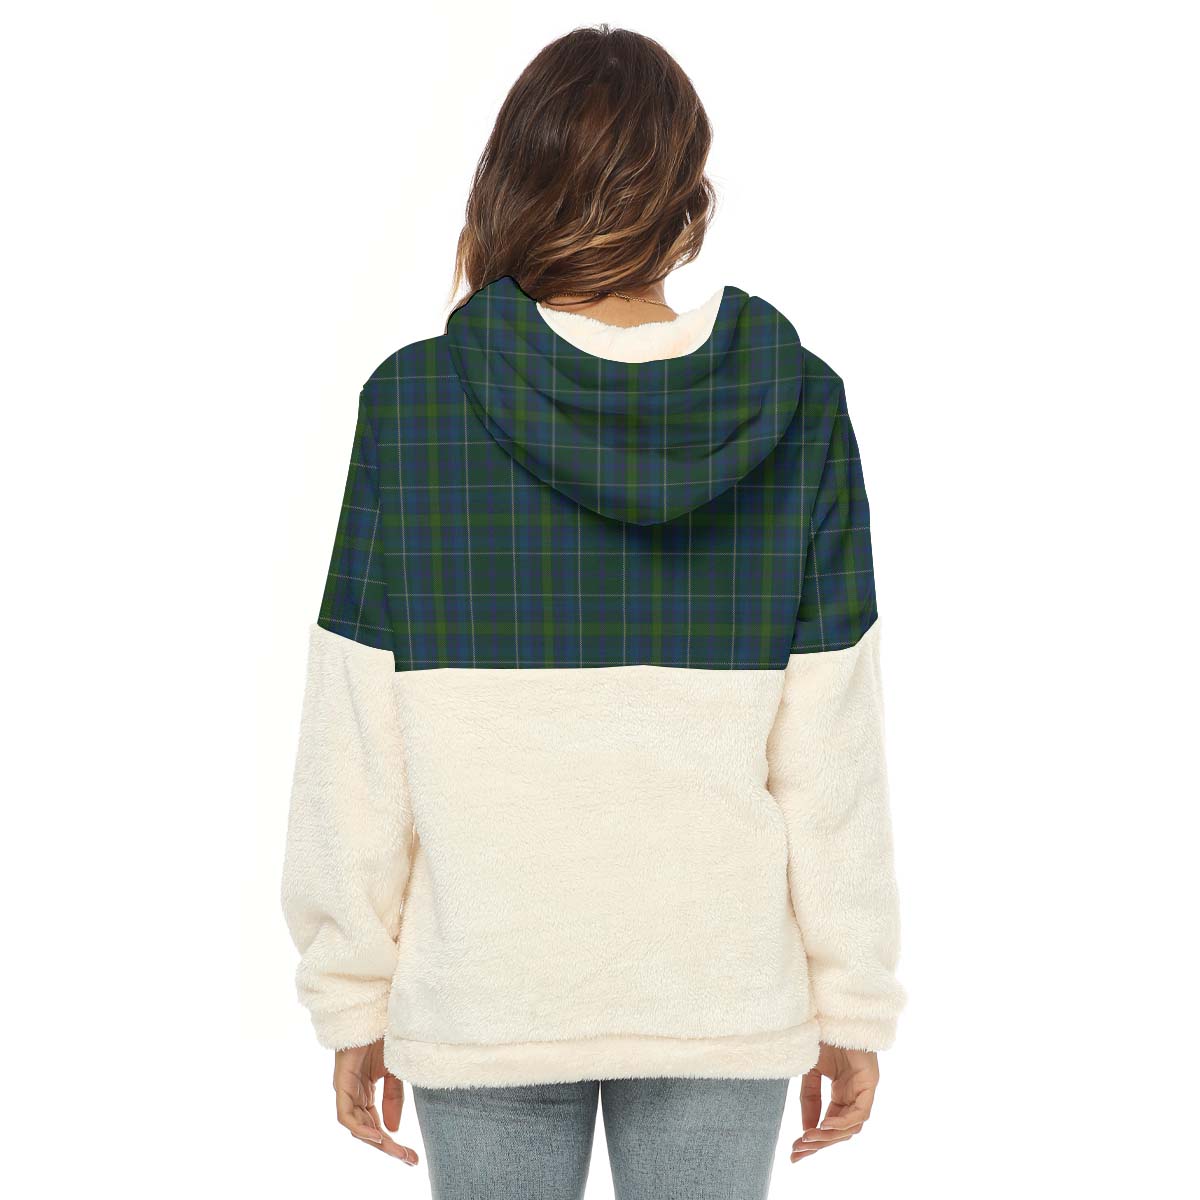 protheroe-of-wales-tartan-womens-borg-fleece-hoodie-with-half-zip